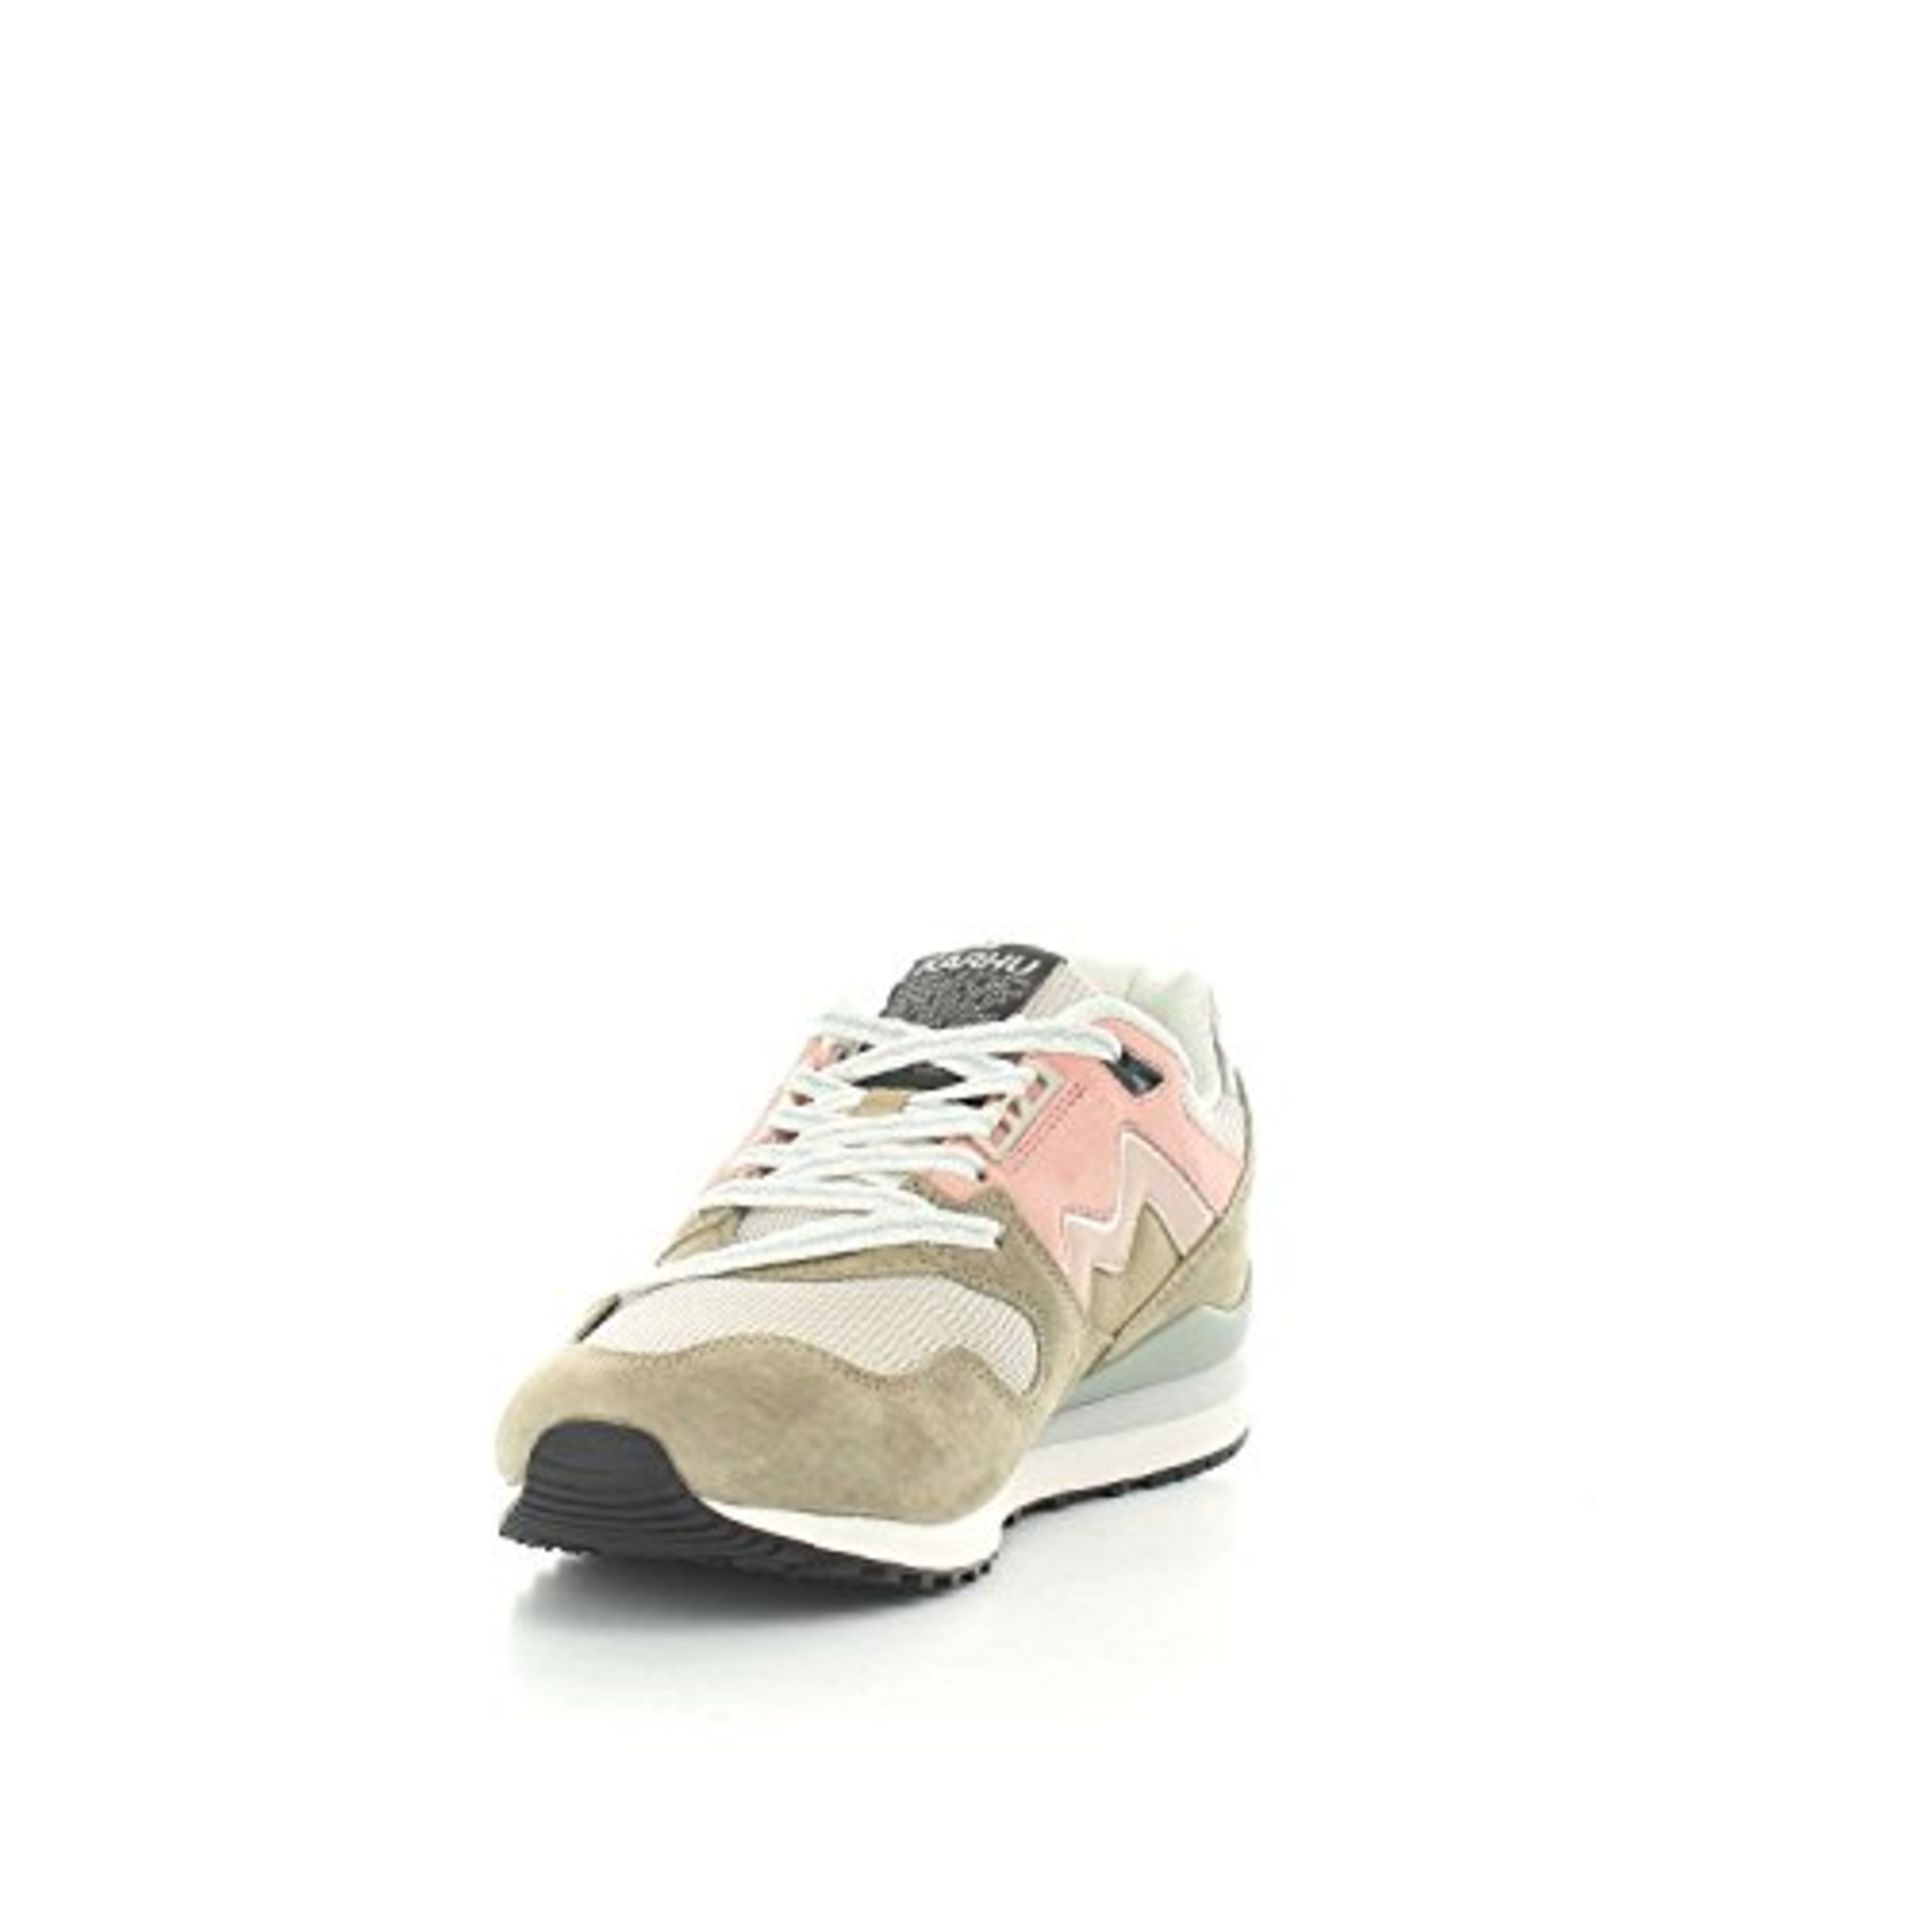 1 x Kahru F802629 Sneakers Man Marrone 42½ Size: 8 UK | EAN: 0846171096103 - Image 4 of 7